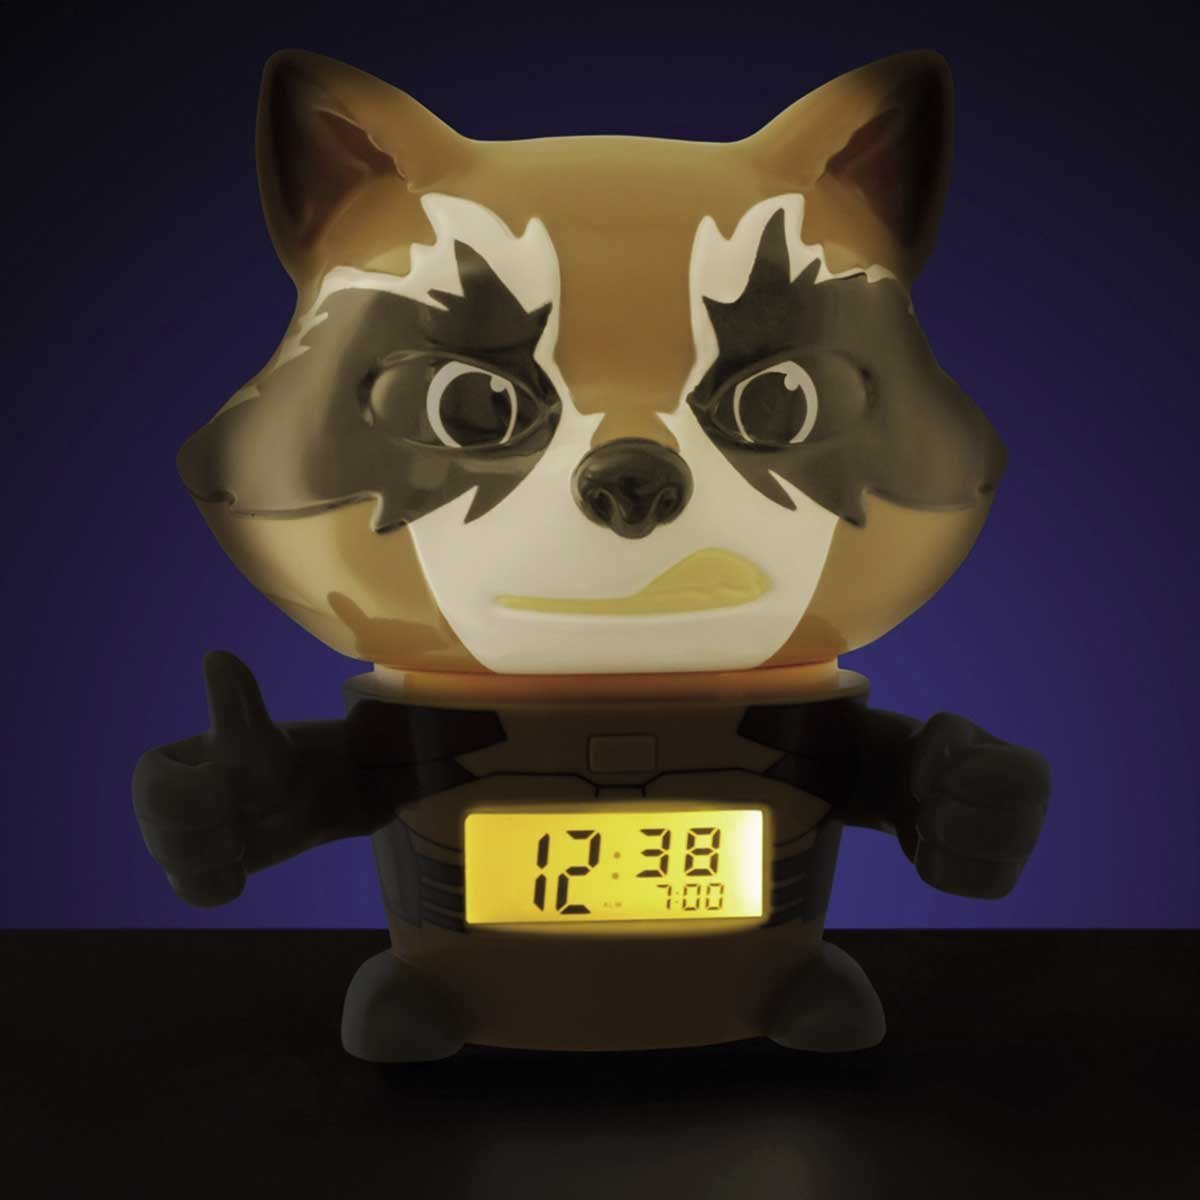 Despertador Infantil Bulb Botz Rocket Raccoon 5.5" Tall